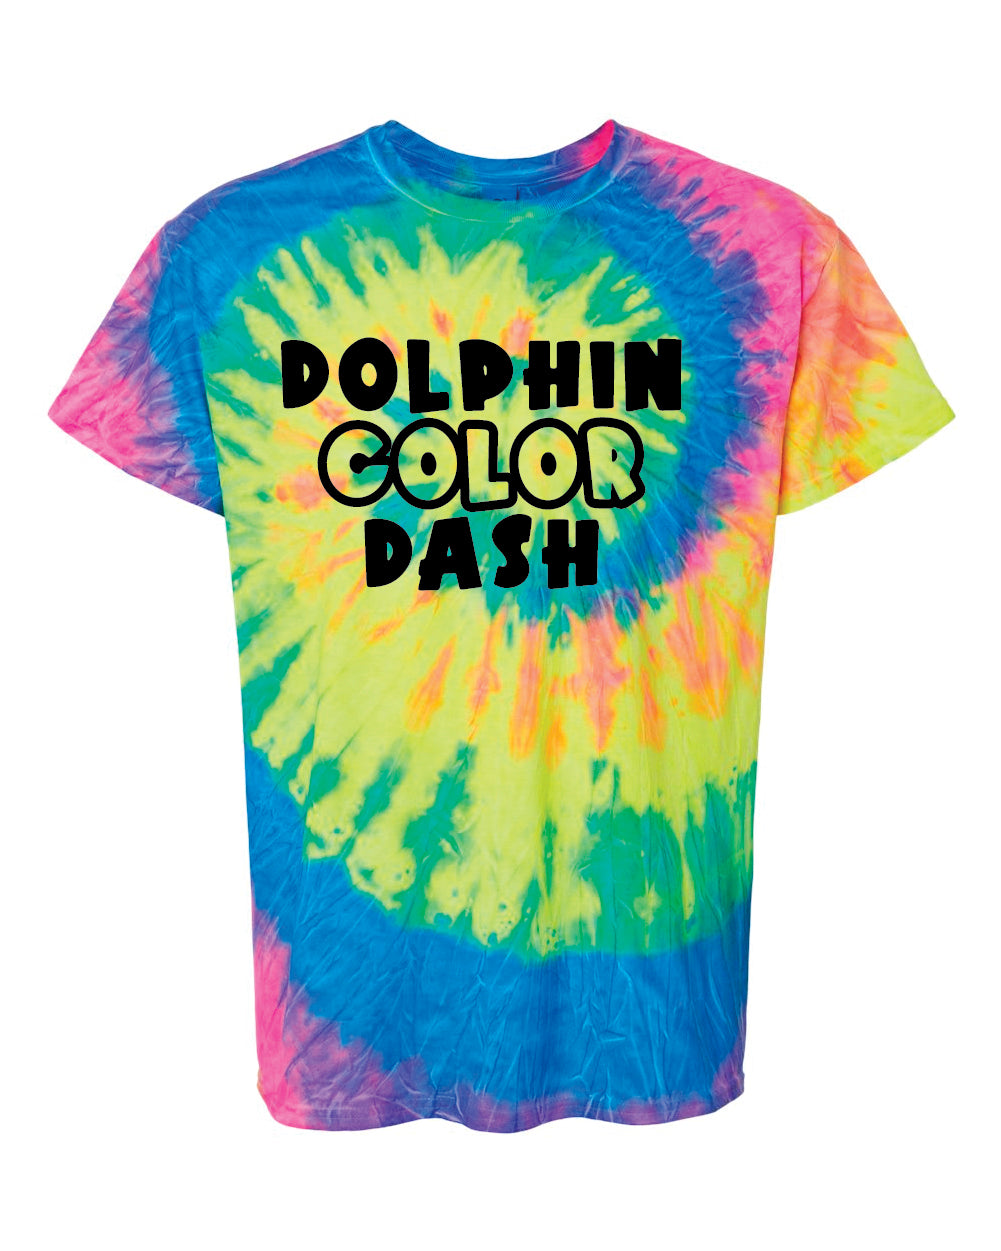 Dolphin Color Dash Volunteer Shirts